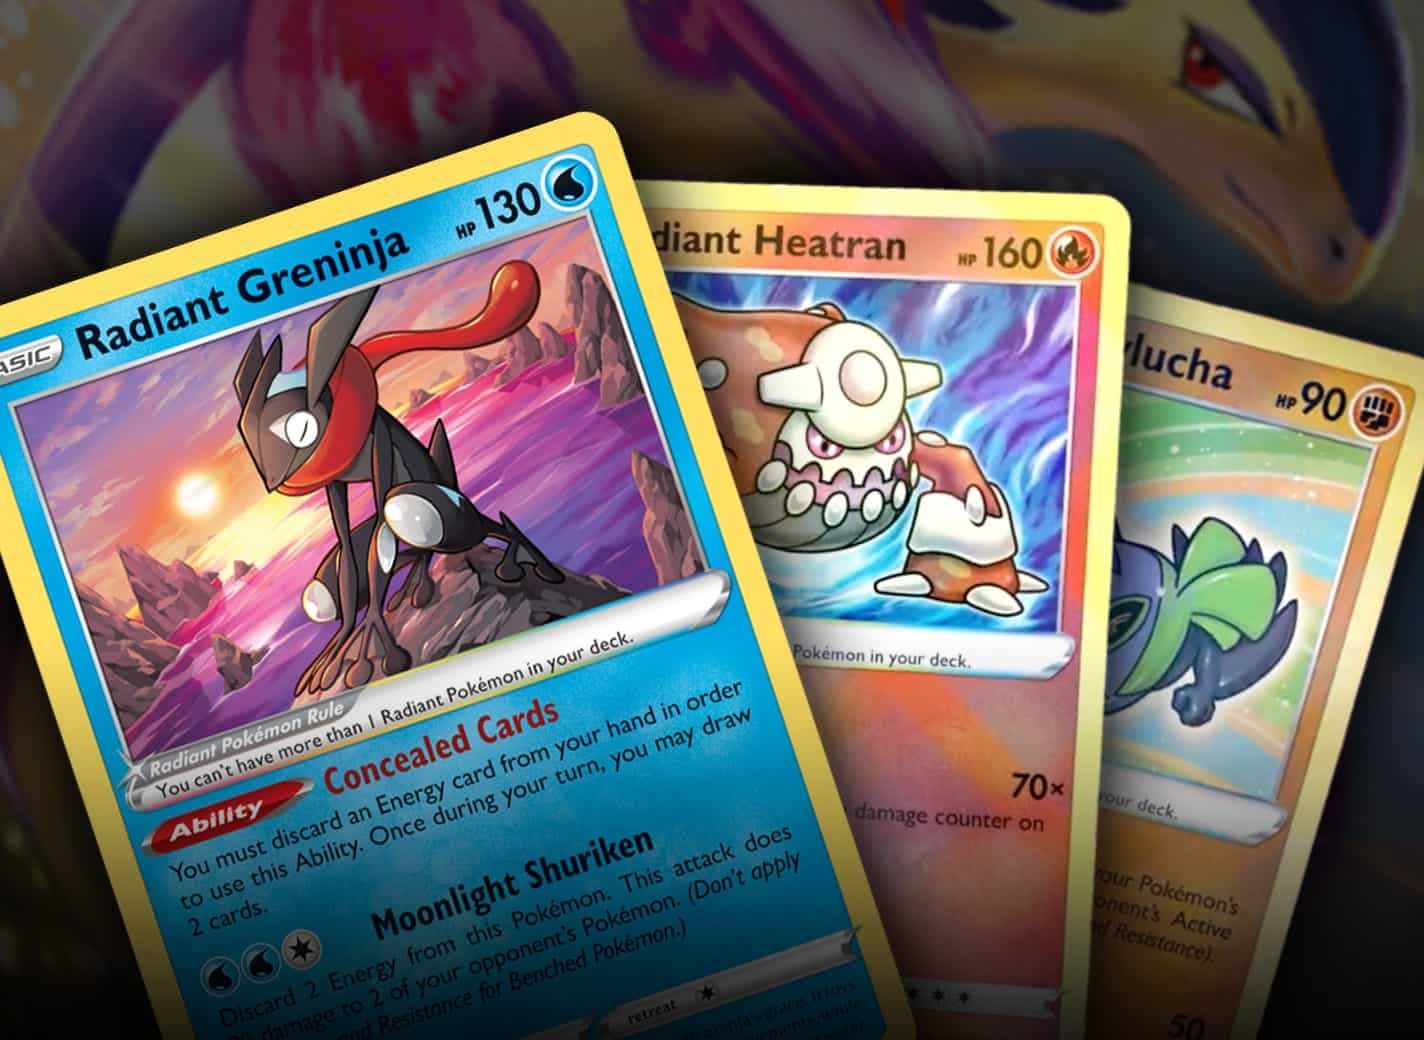 200 Pokemon Cards Bulk Lot 2x Ultra Rare V 24 Rares & Shiny Holo Amazing  Gift!